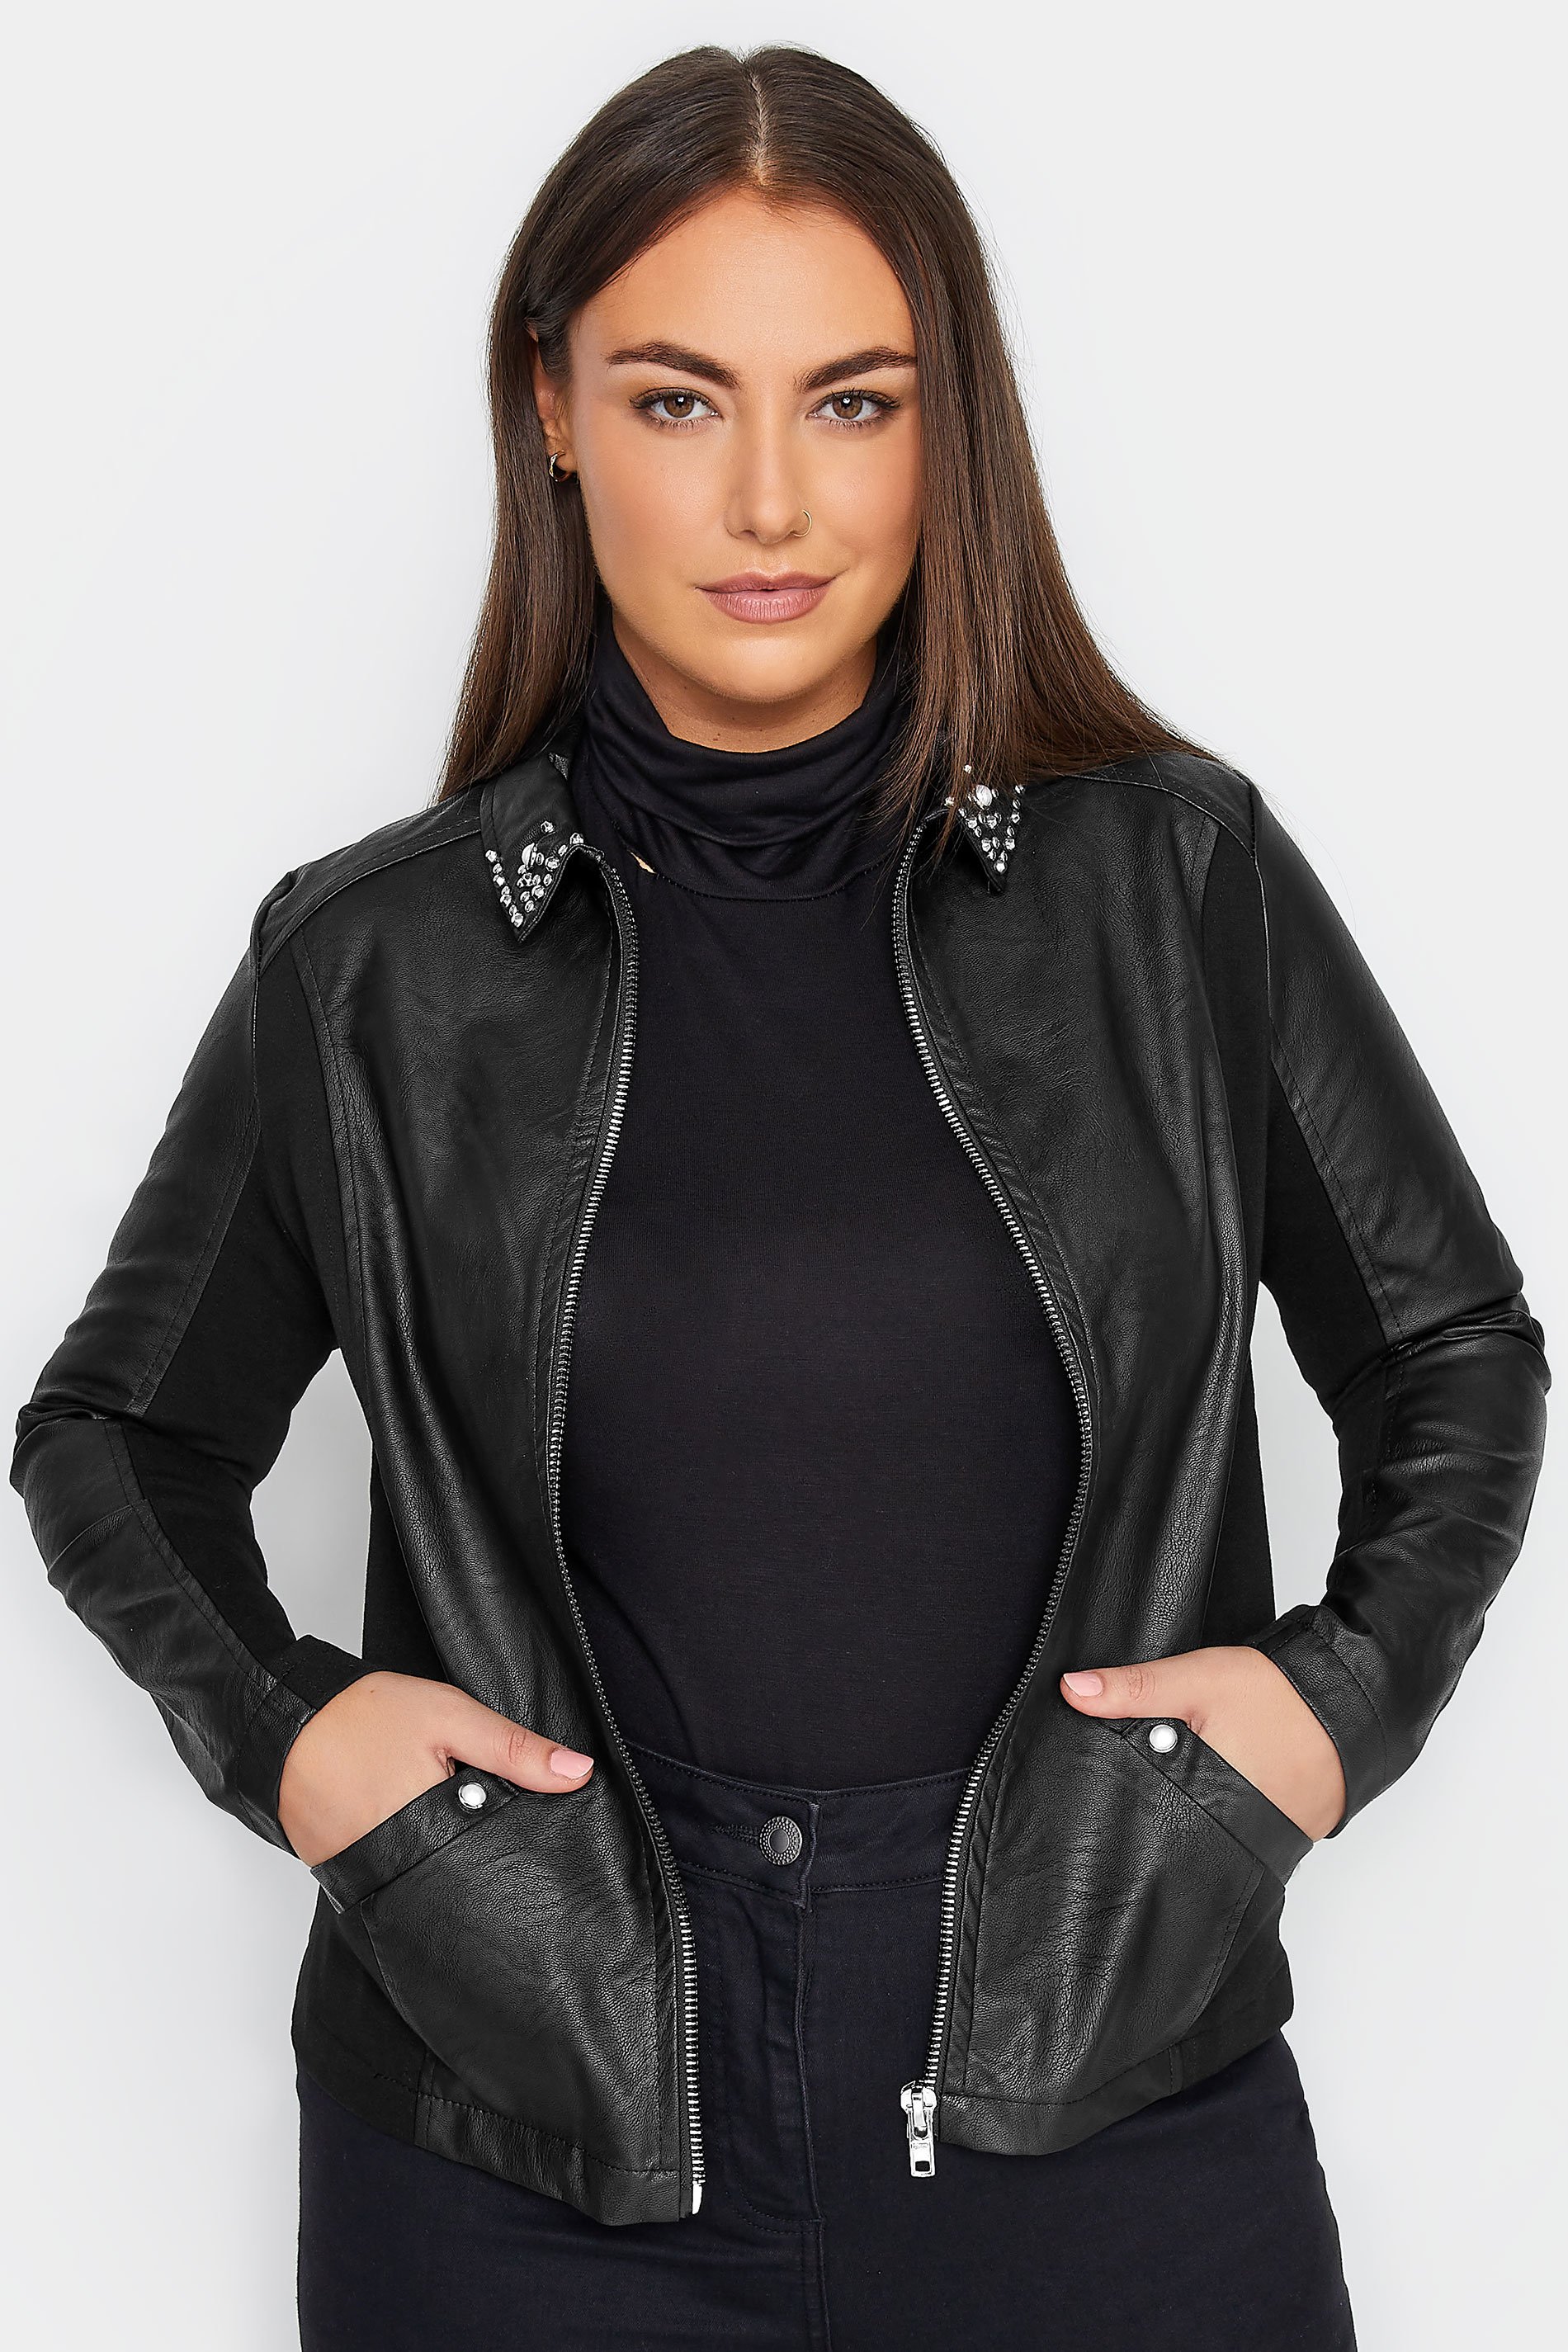 Manon Baptiste Black Embellished Faux Leather Jacket | Evans